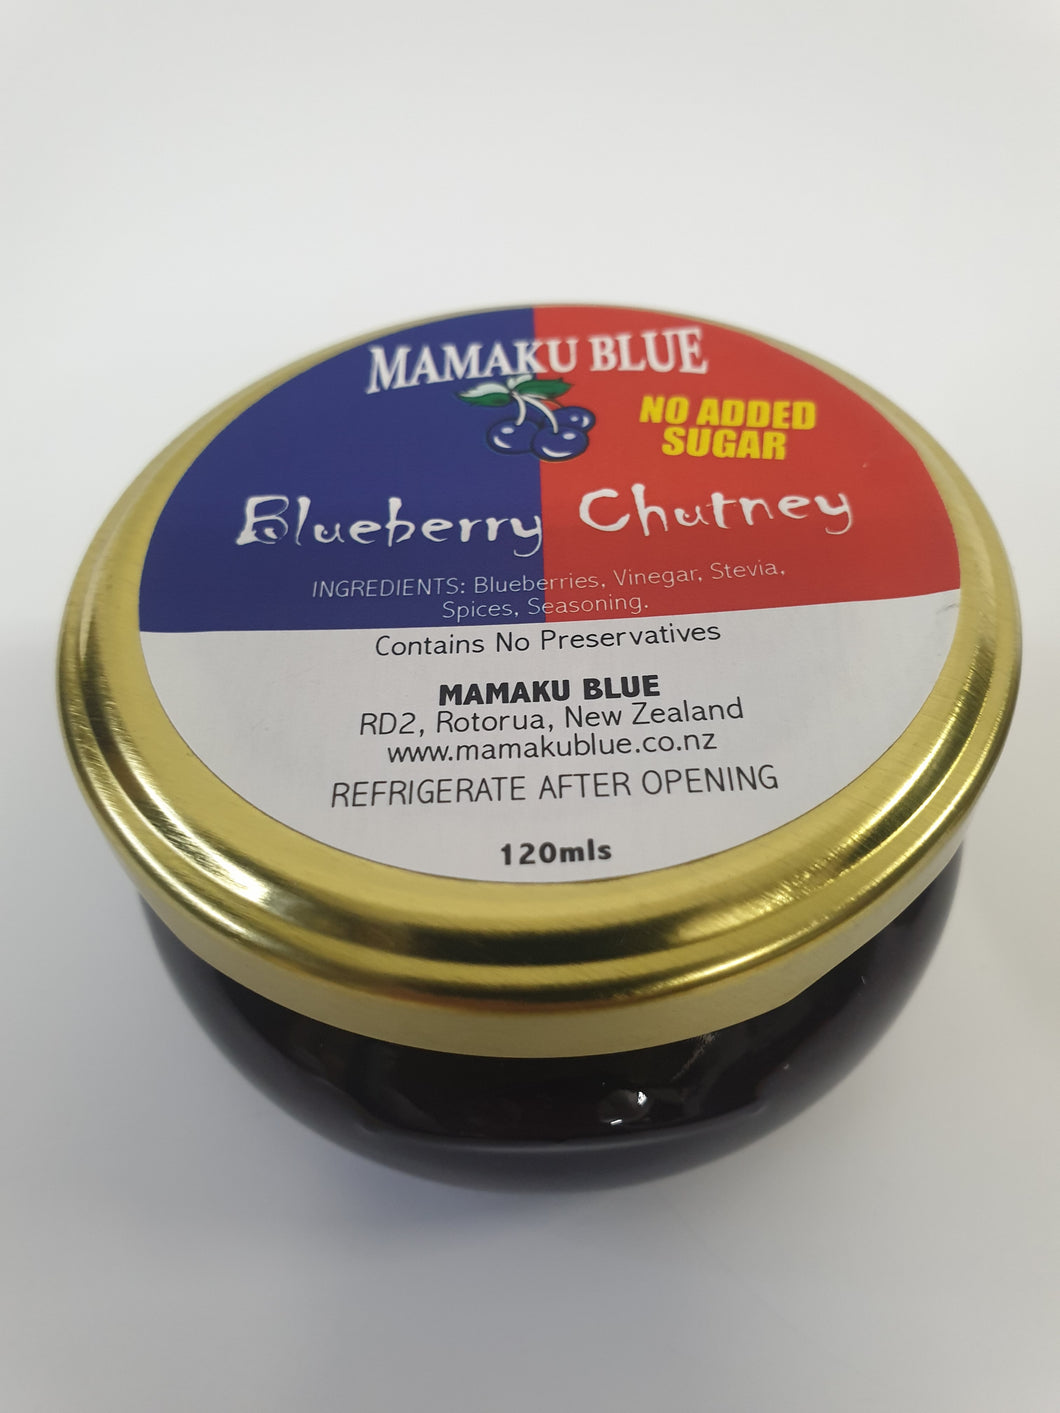 Blueberry Chutney - No Added Sugar